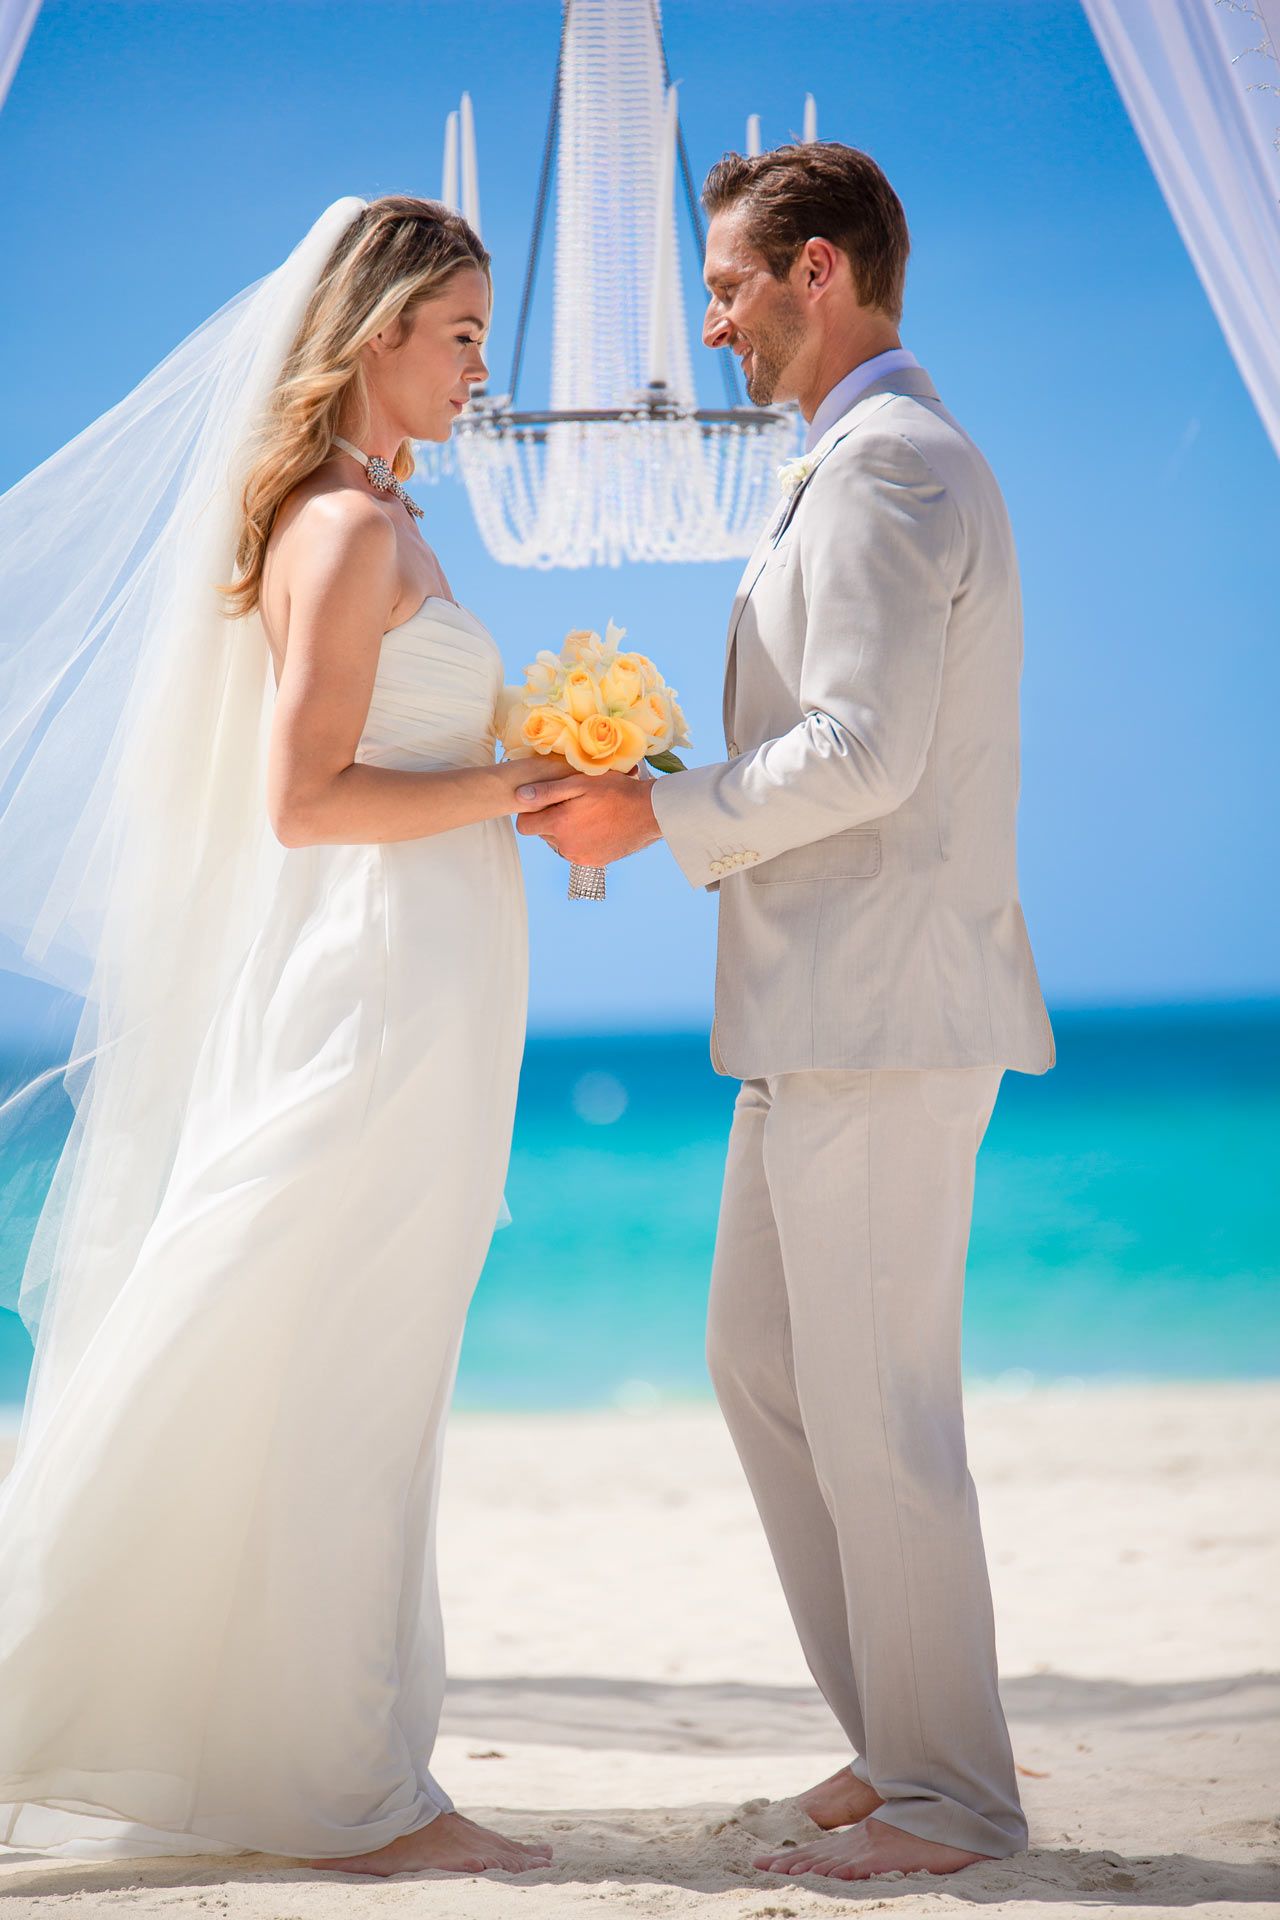 Beach elopement wedding in the Caribbean